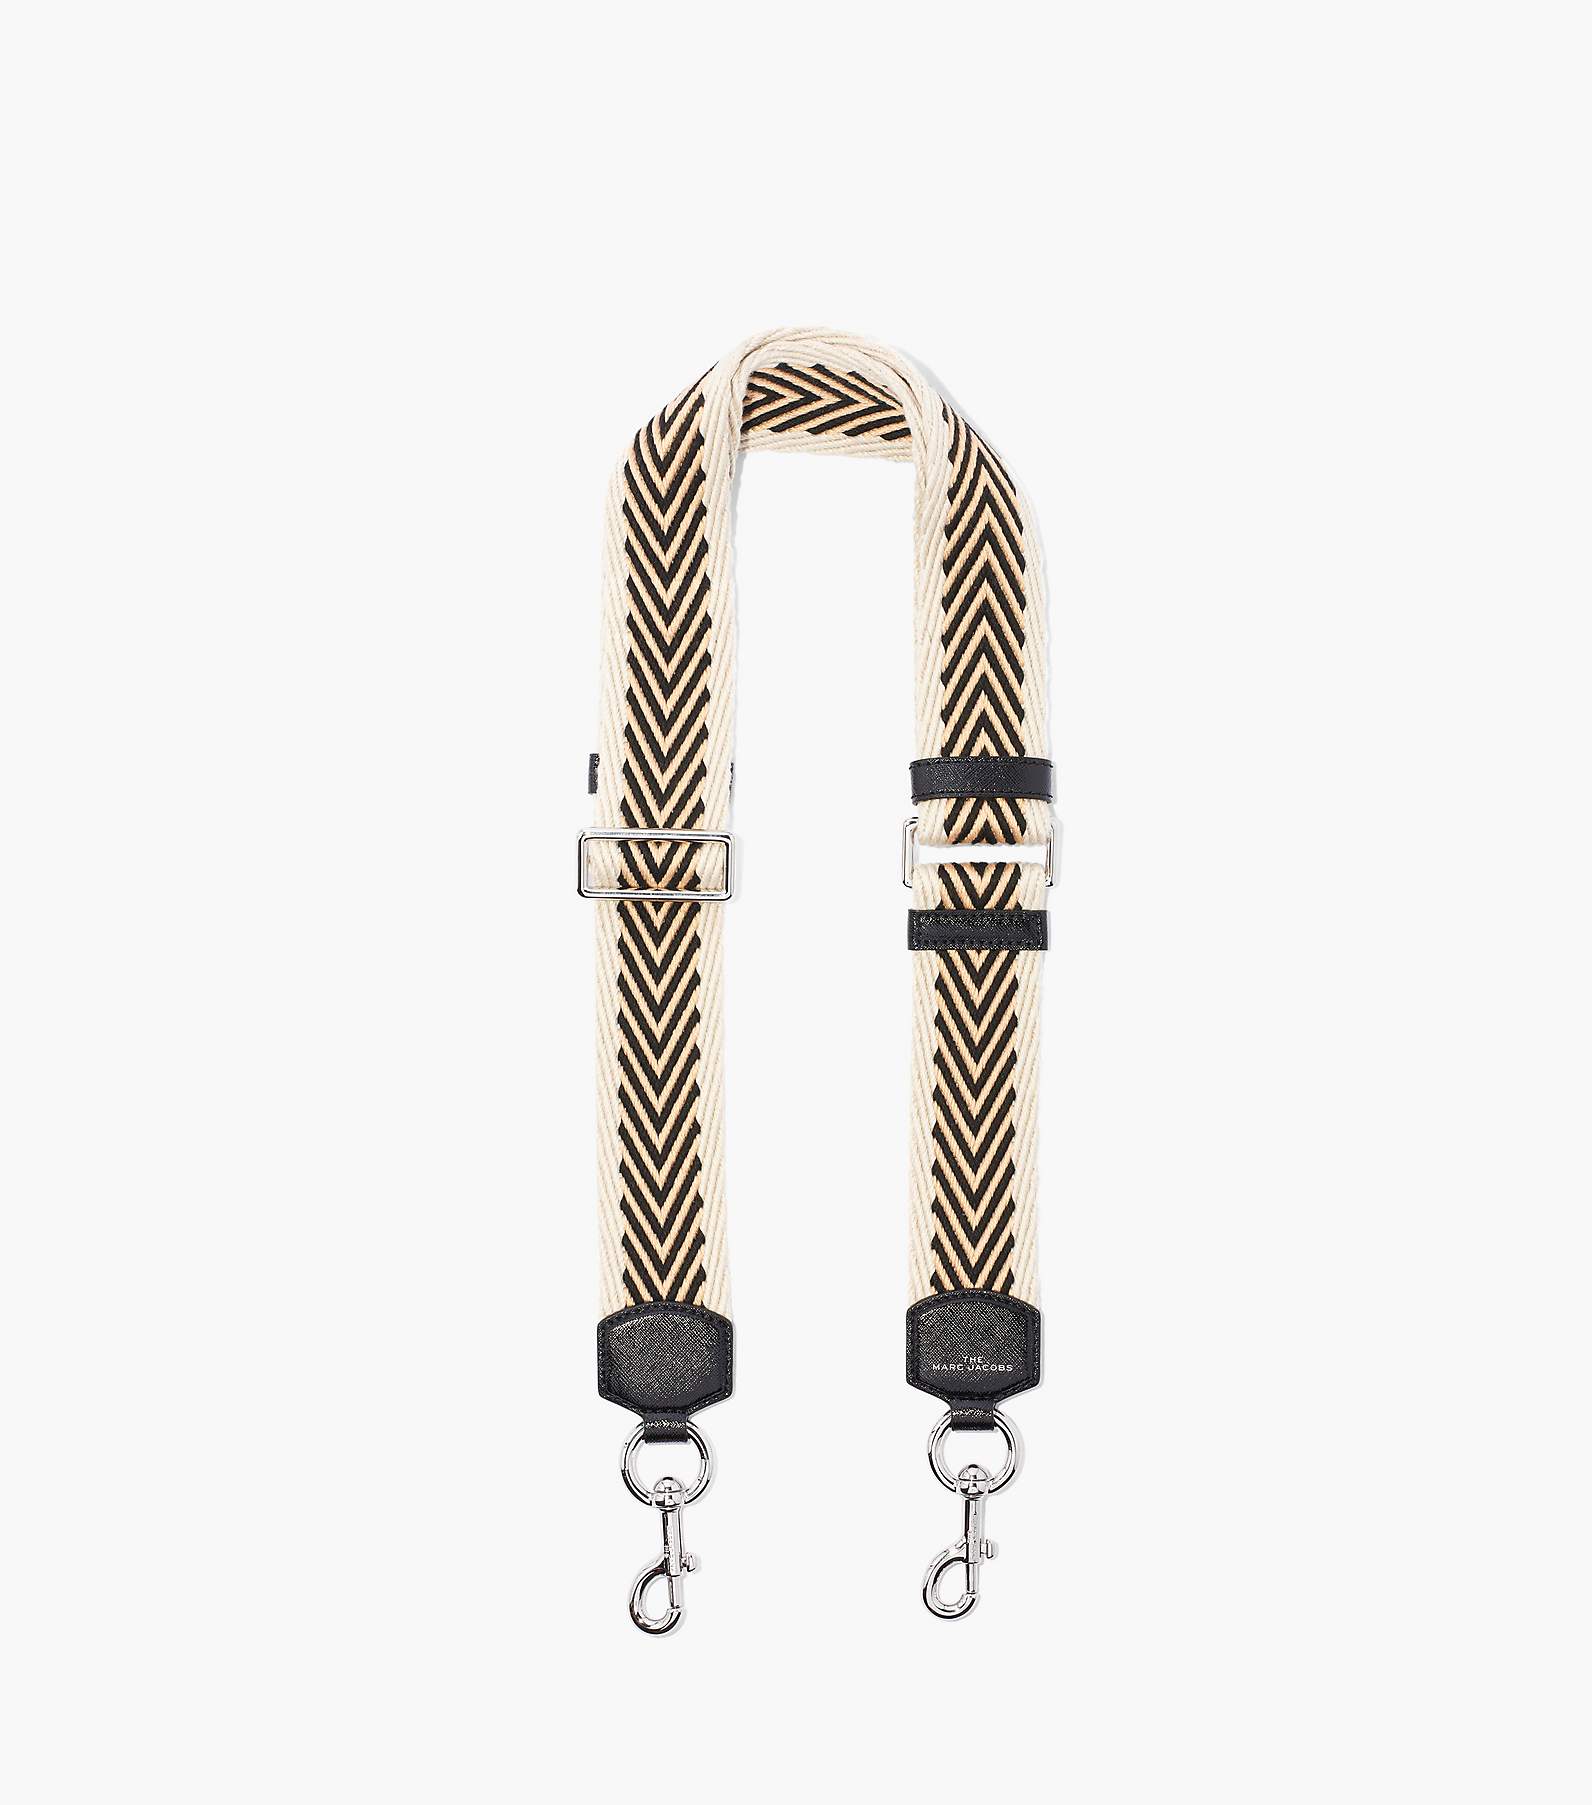 Shop Marc Jacobs Snapshot Bag Strap online